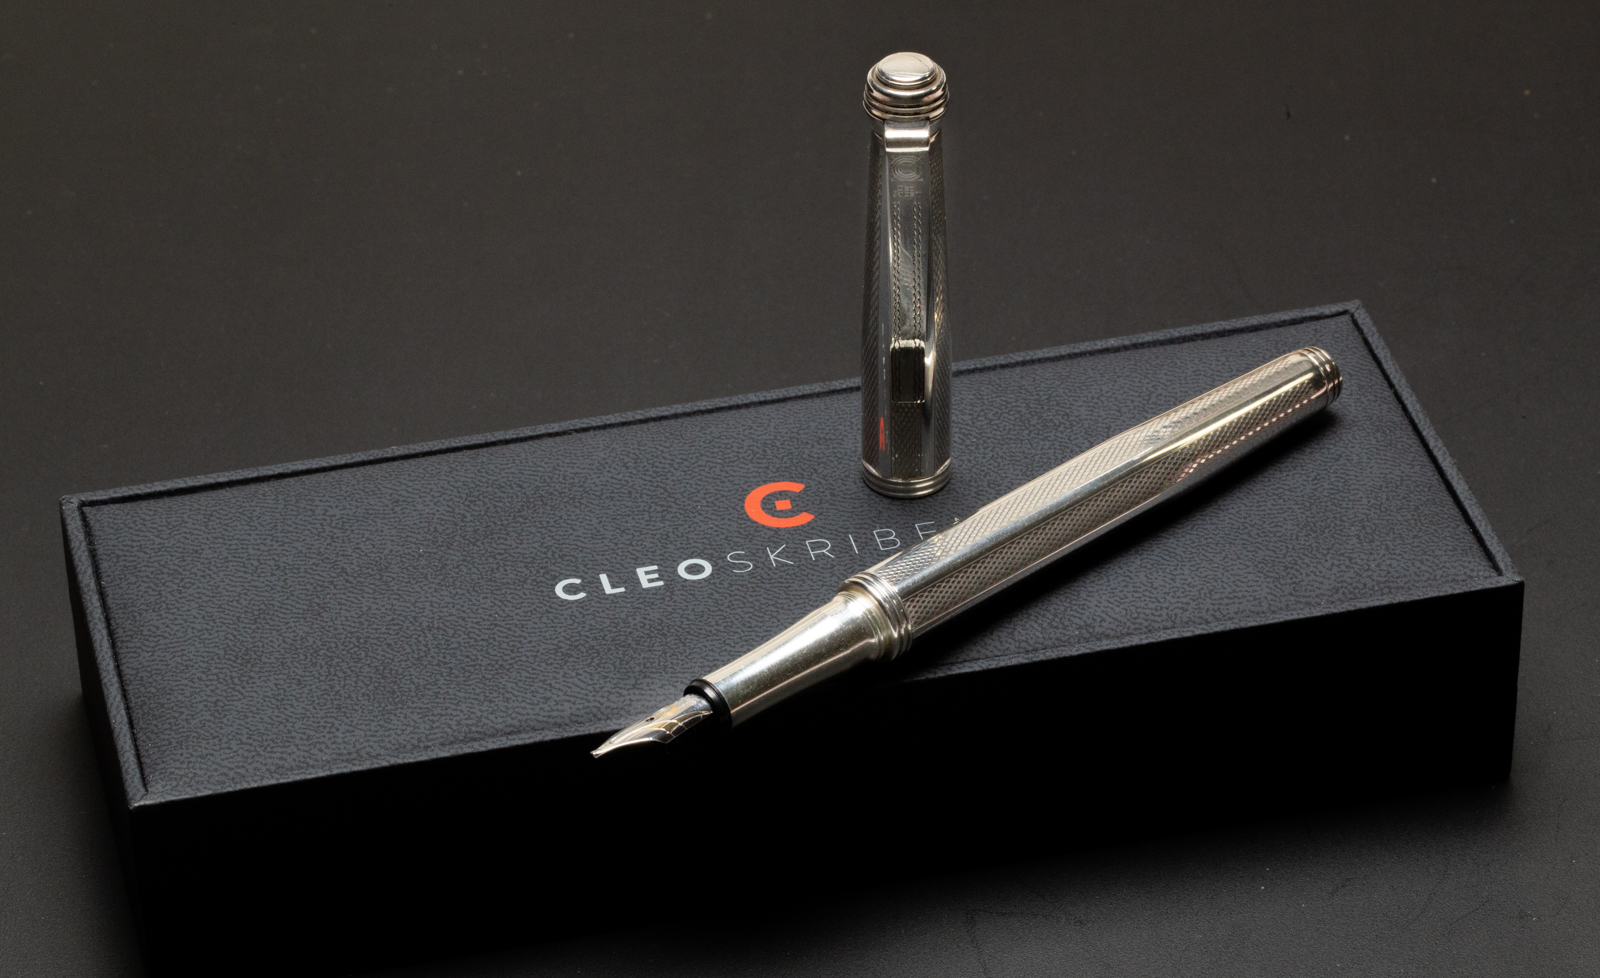 Pens and Pencils: : Cleo Skribent: Linea Arte